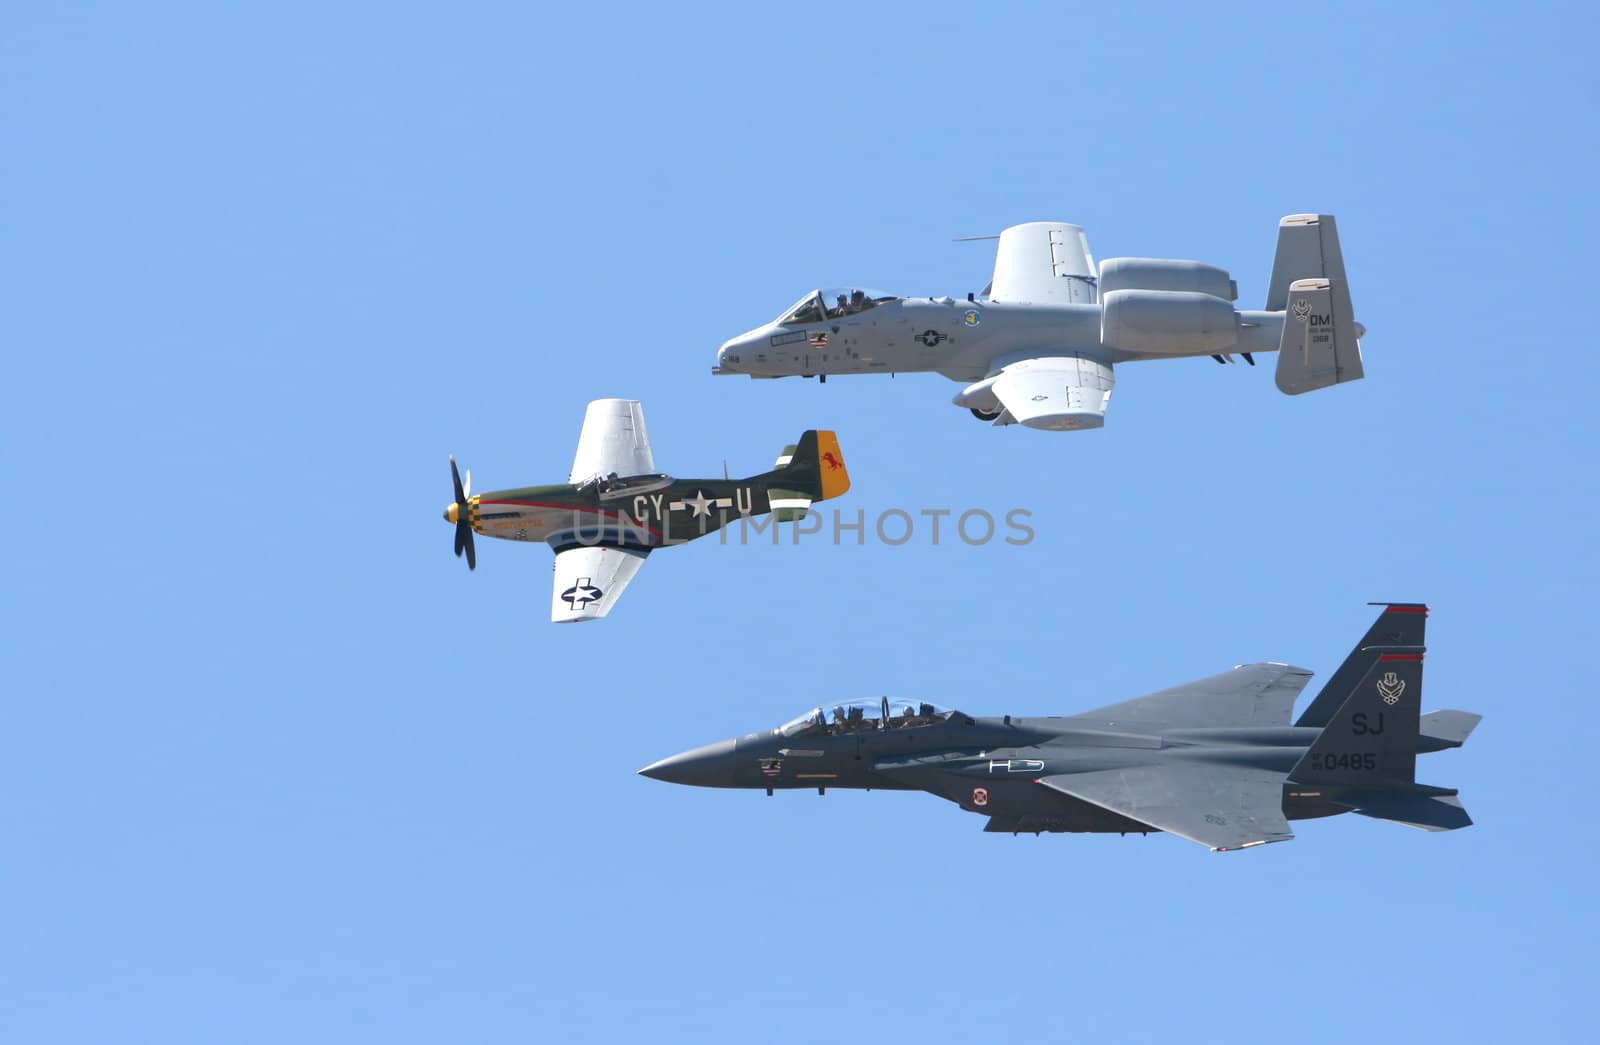 Aircraft trio by deserttrends